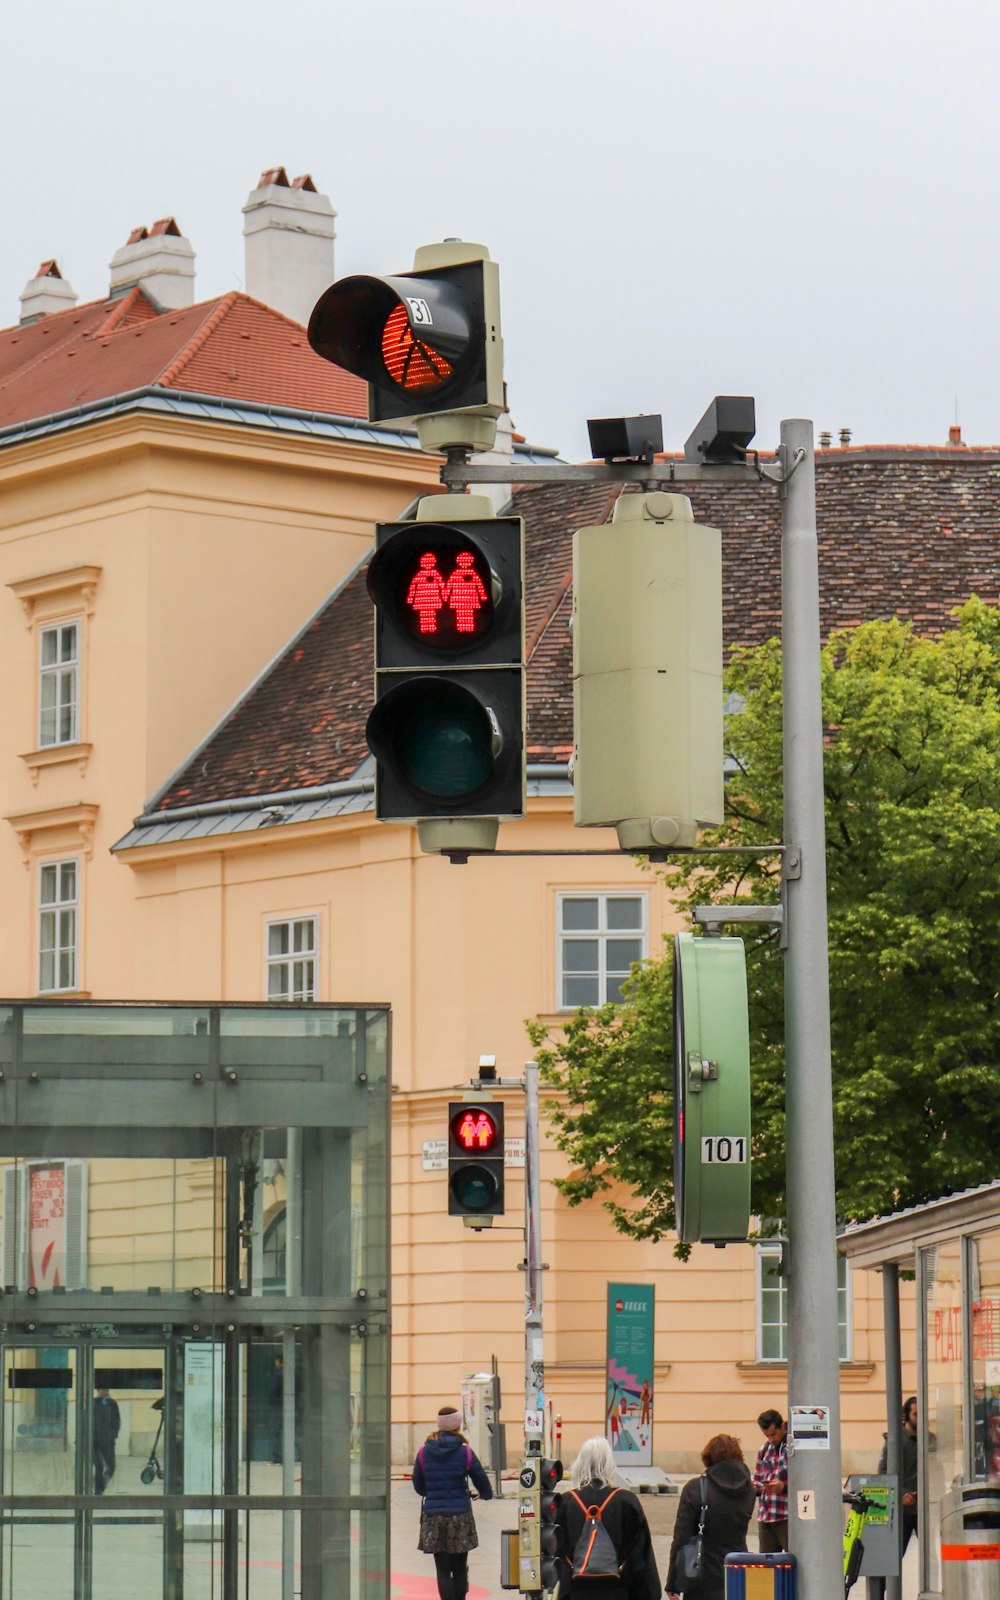 traffic light on red light